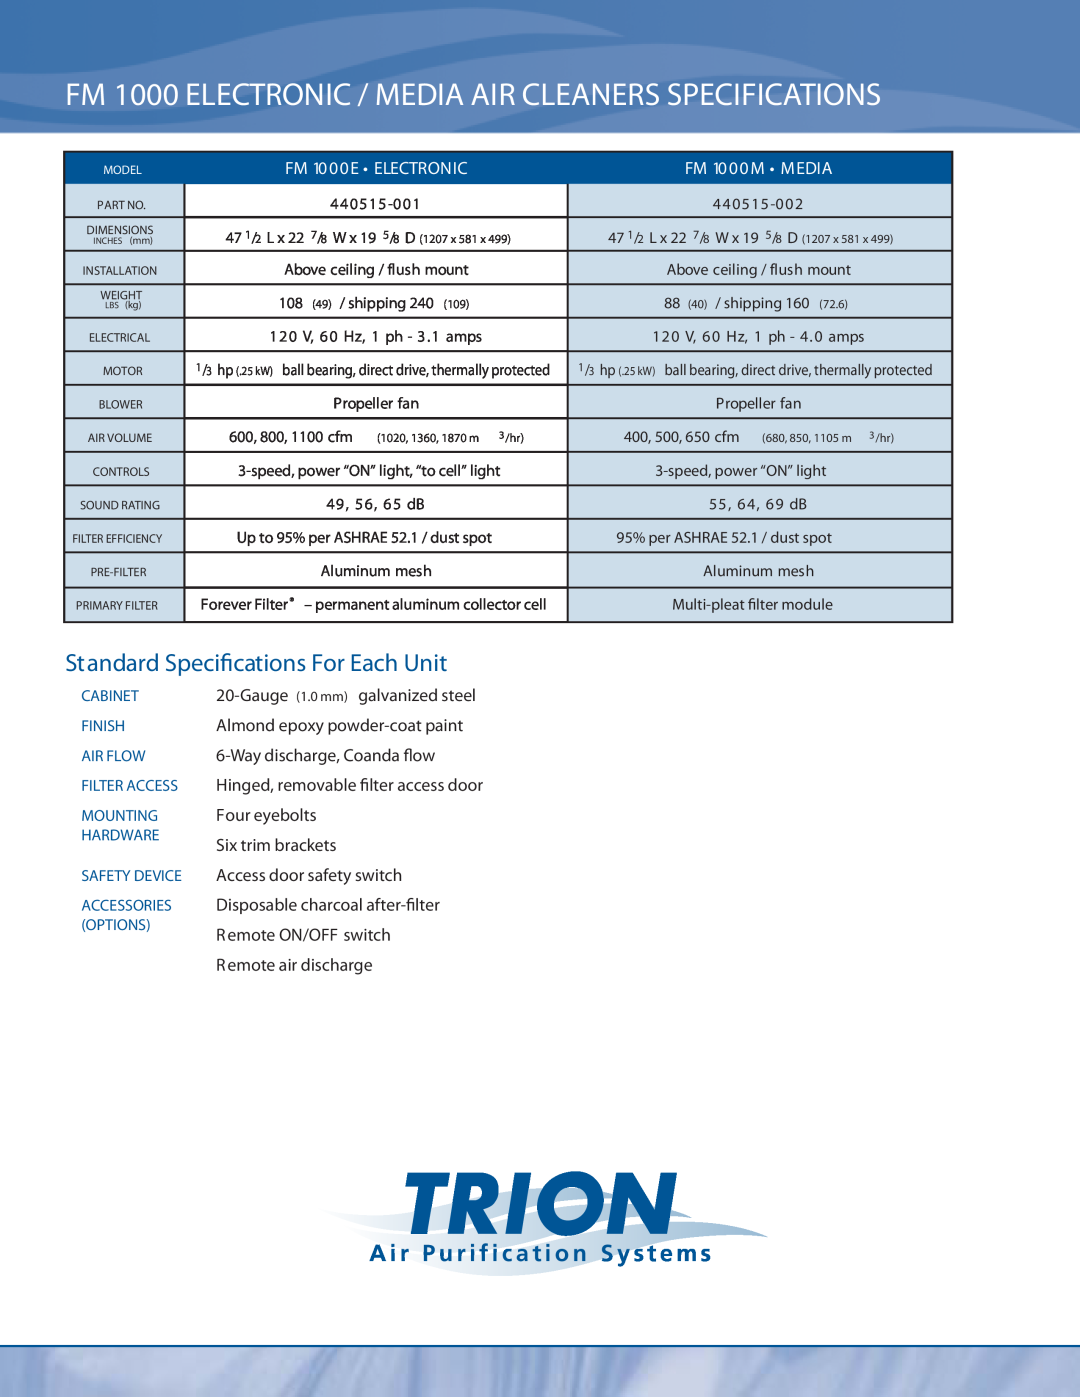 Trion FM 1000M Standard Specications For Each Unit, A i r P u r i f i c a t i o n S y s t e m s, FM 1000E, Electronic 